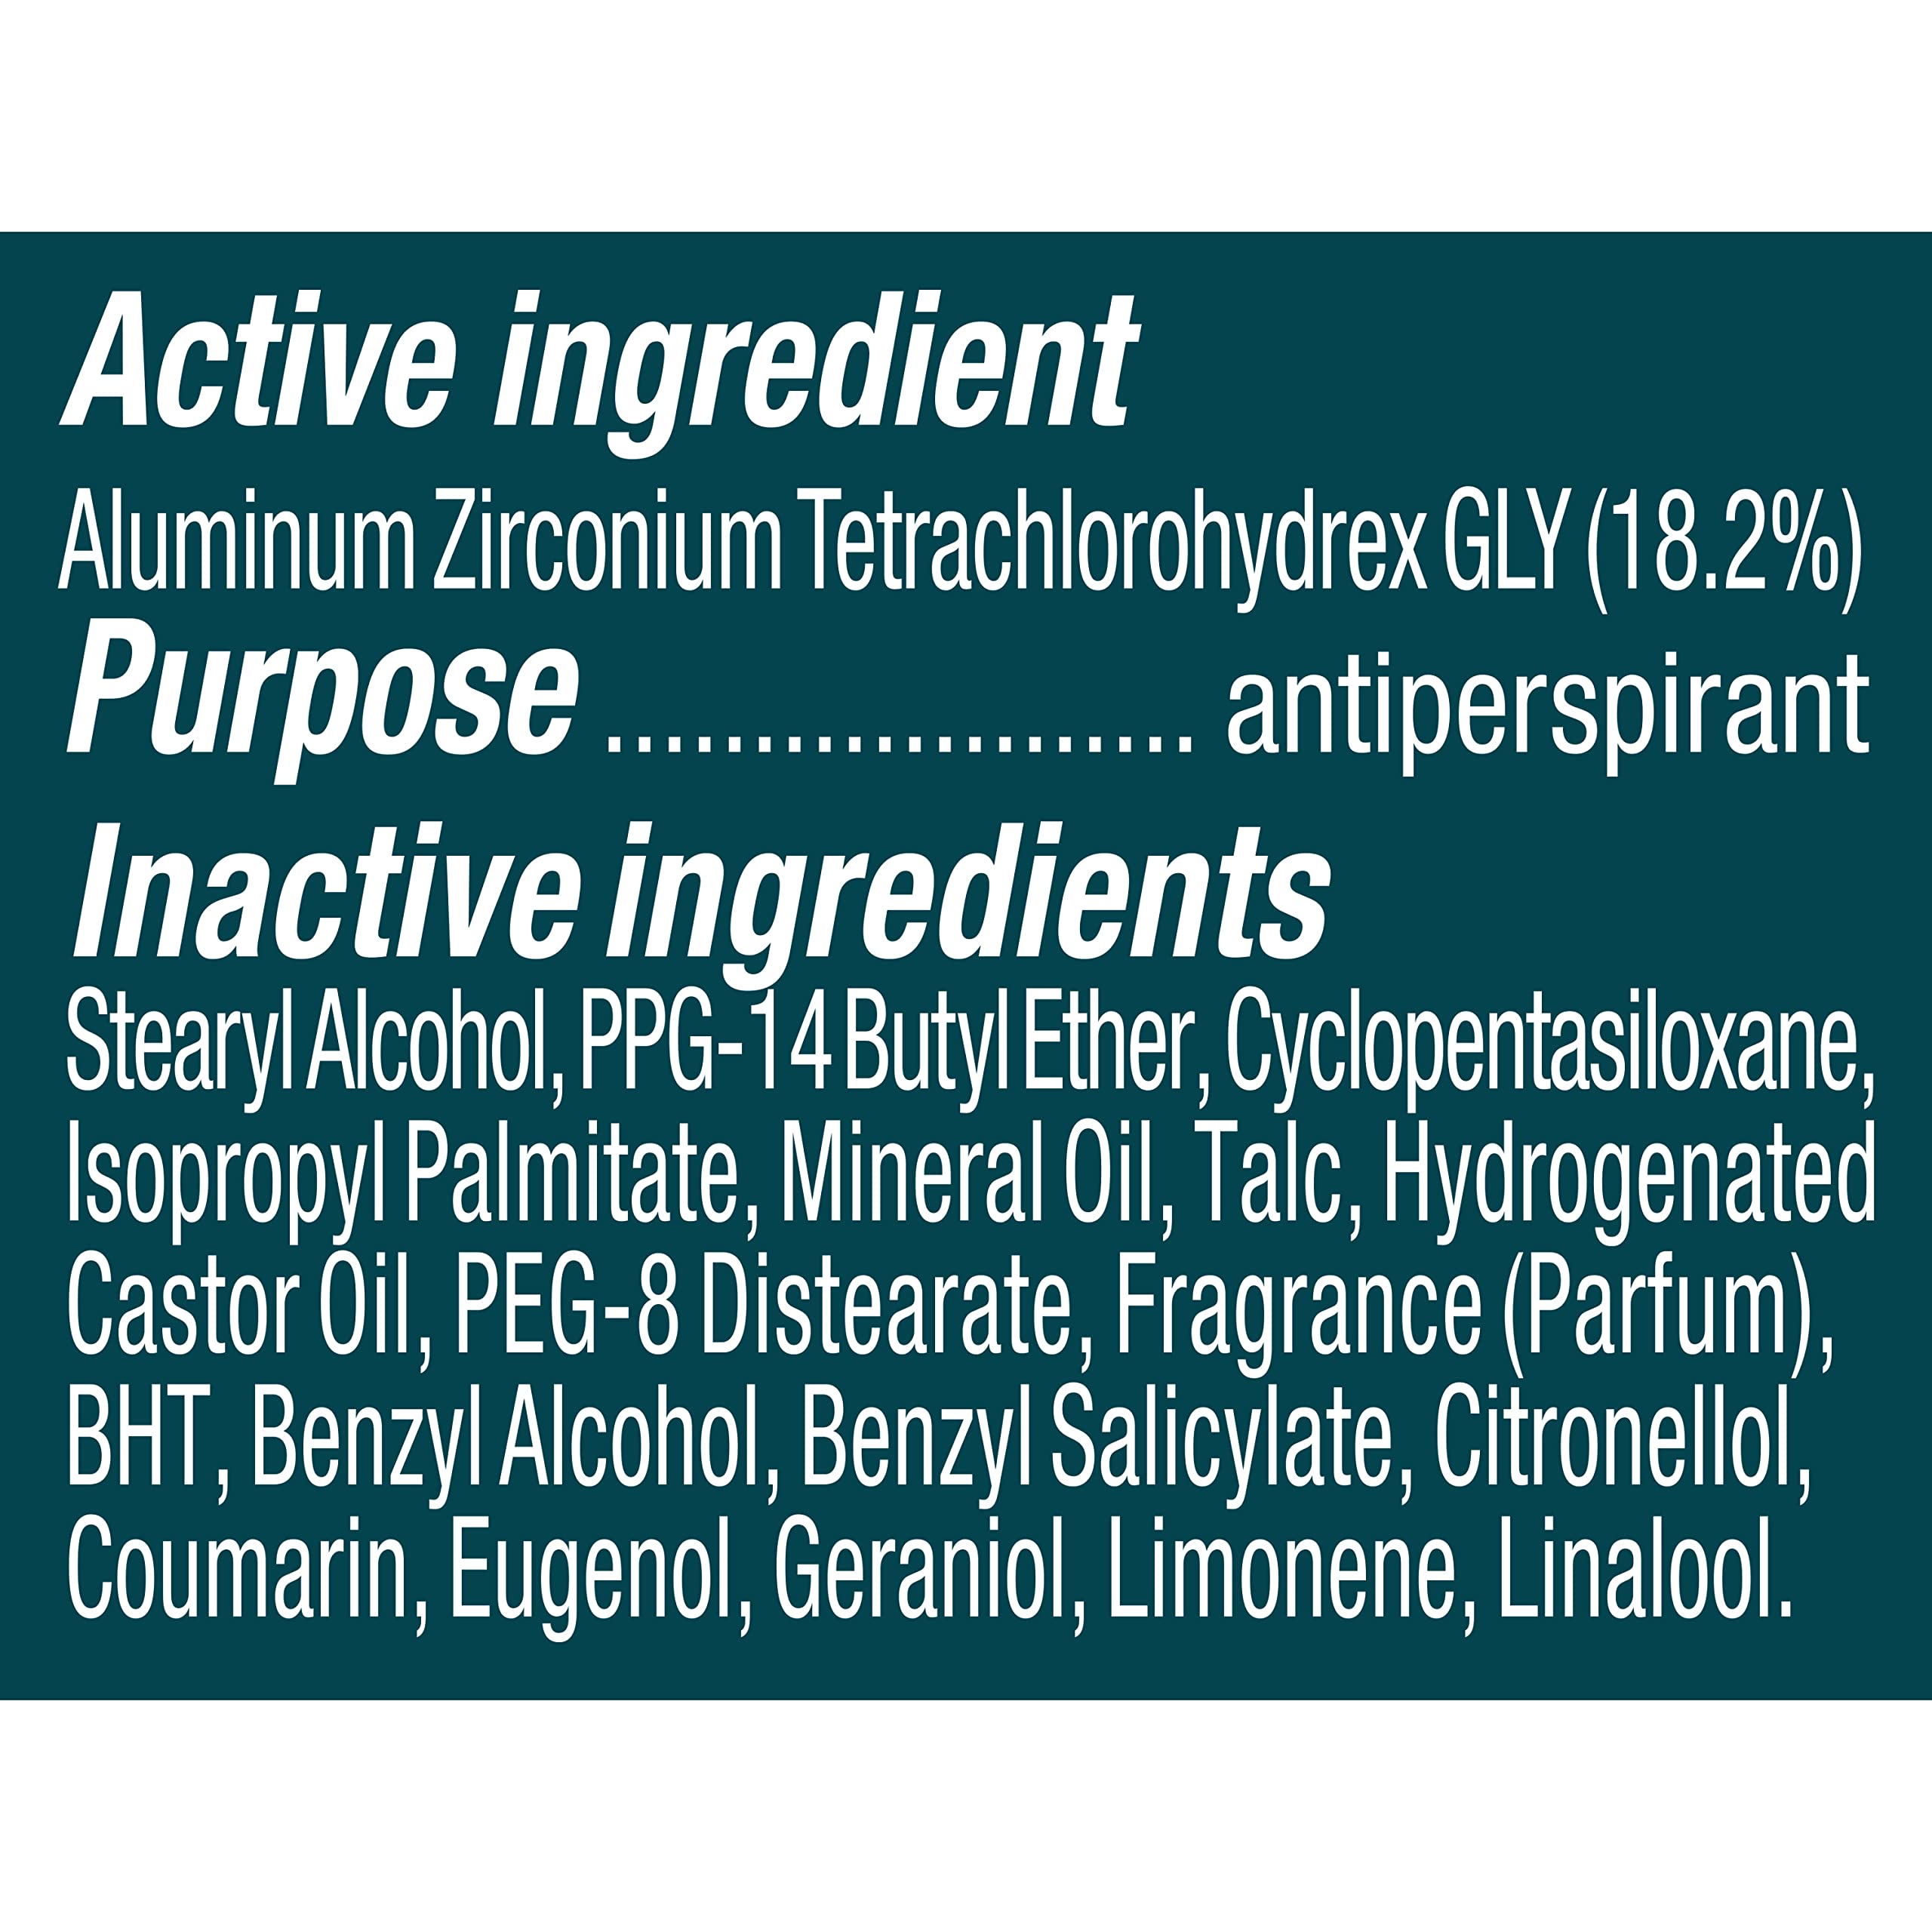 Degree Men Original Protection Antiperspirant Deodorant, Sport 2.7 oz, 4 count (Packaging may vary)